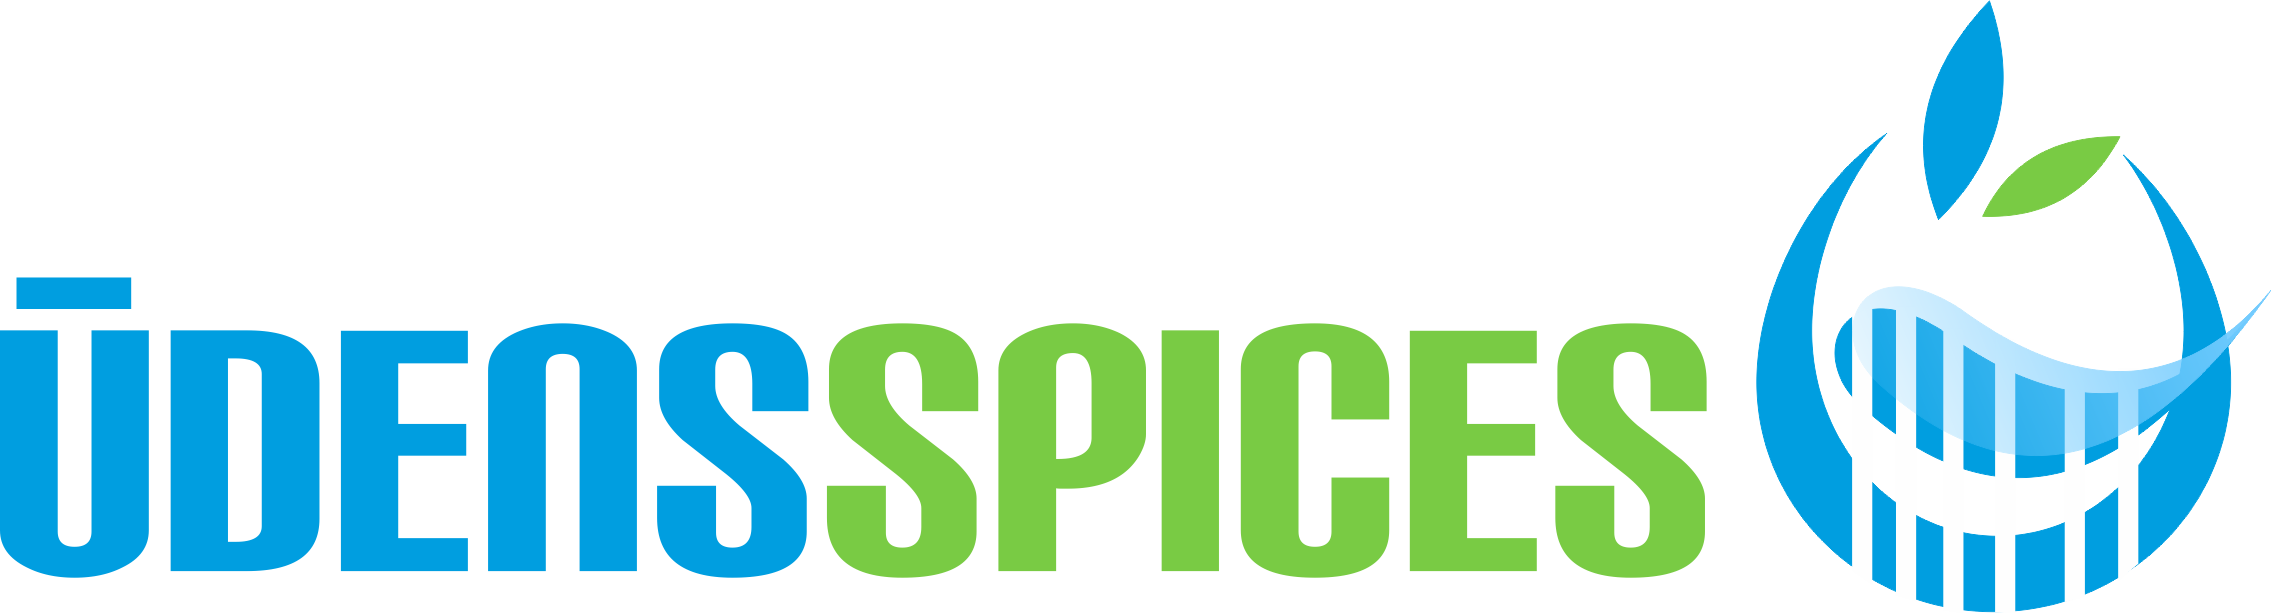 udensspices logo